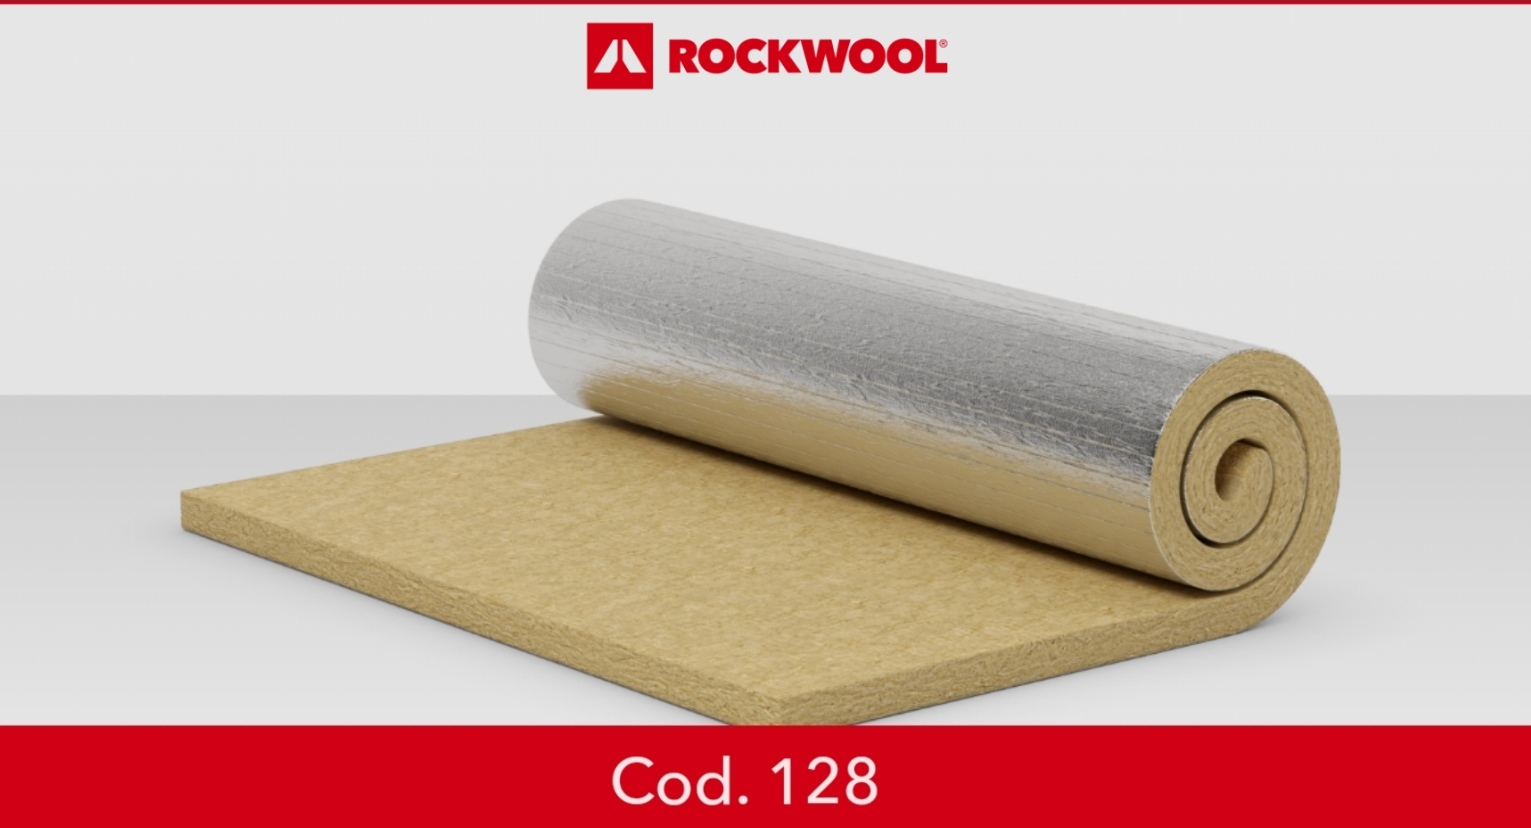 Feltro in lana di roccia Cod. 128 -Rockwool